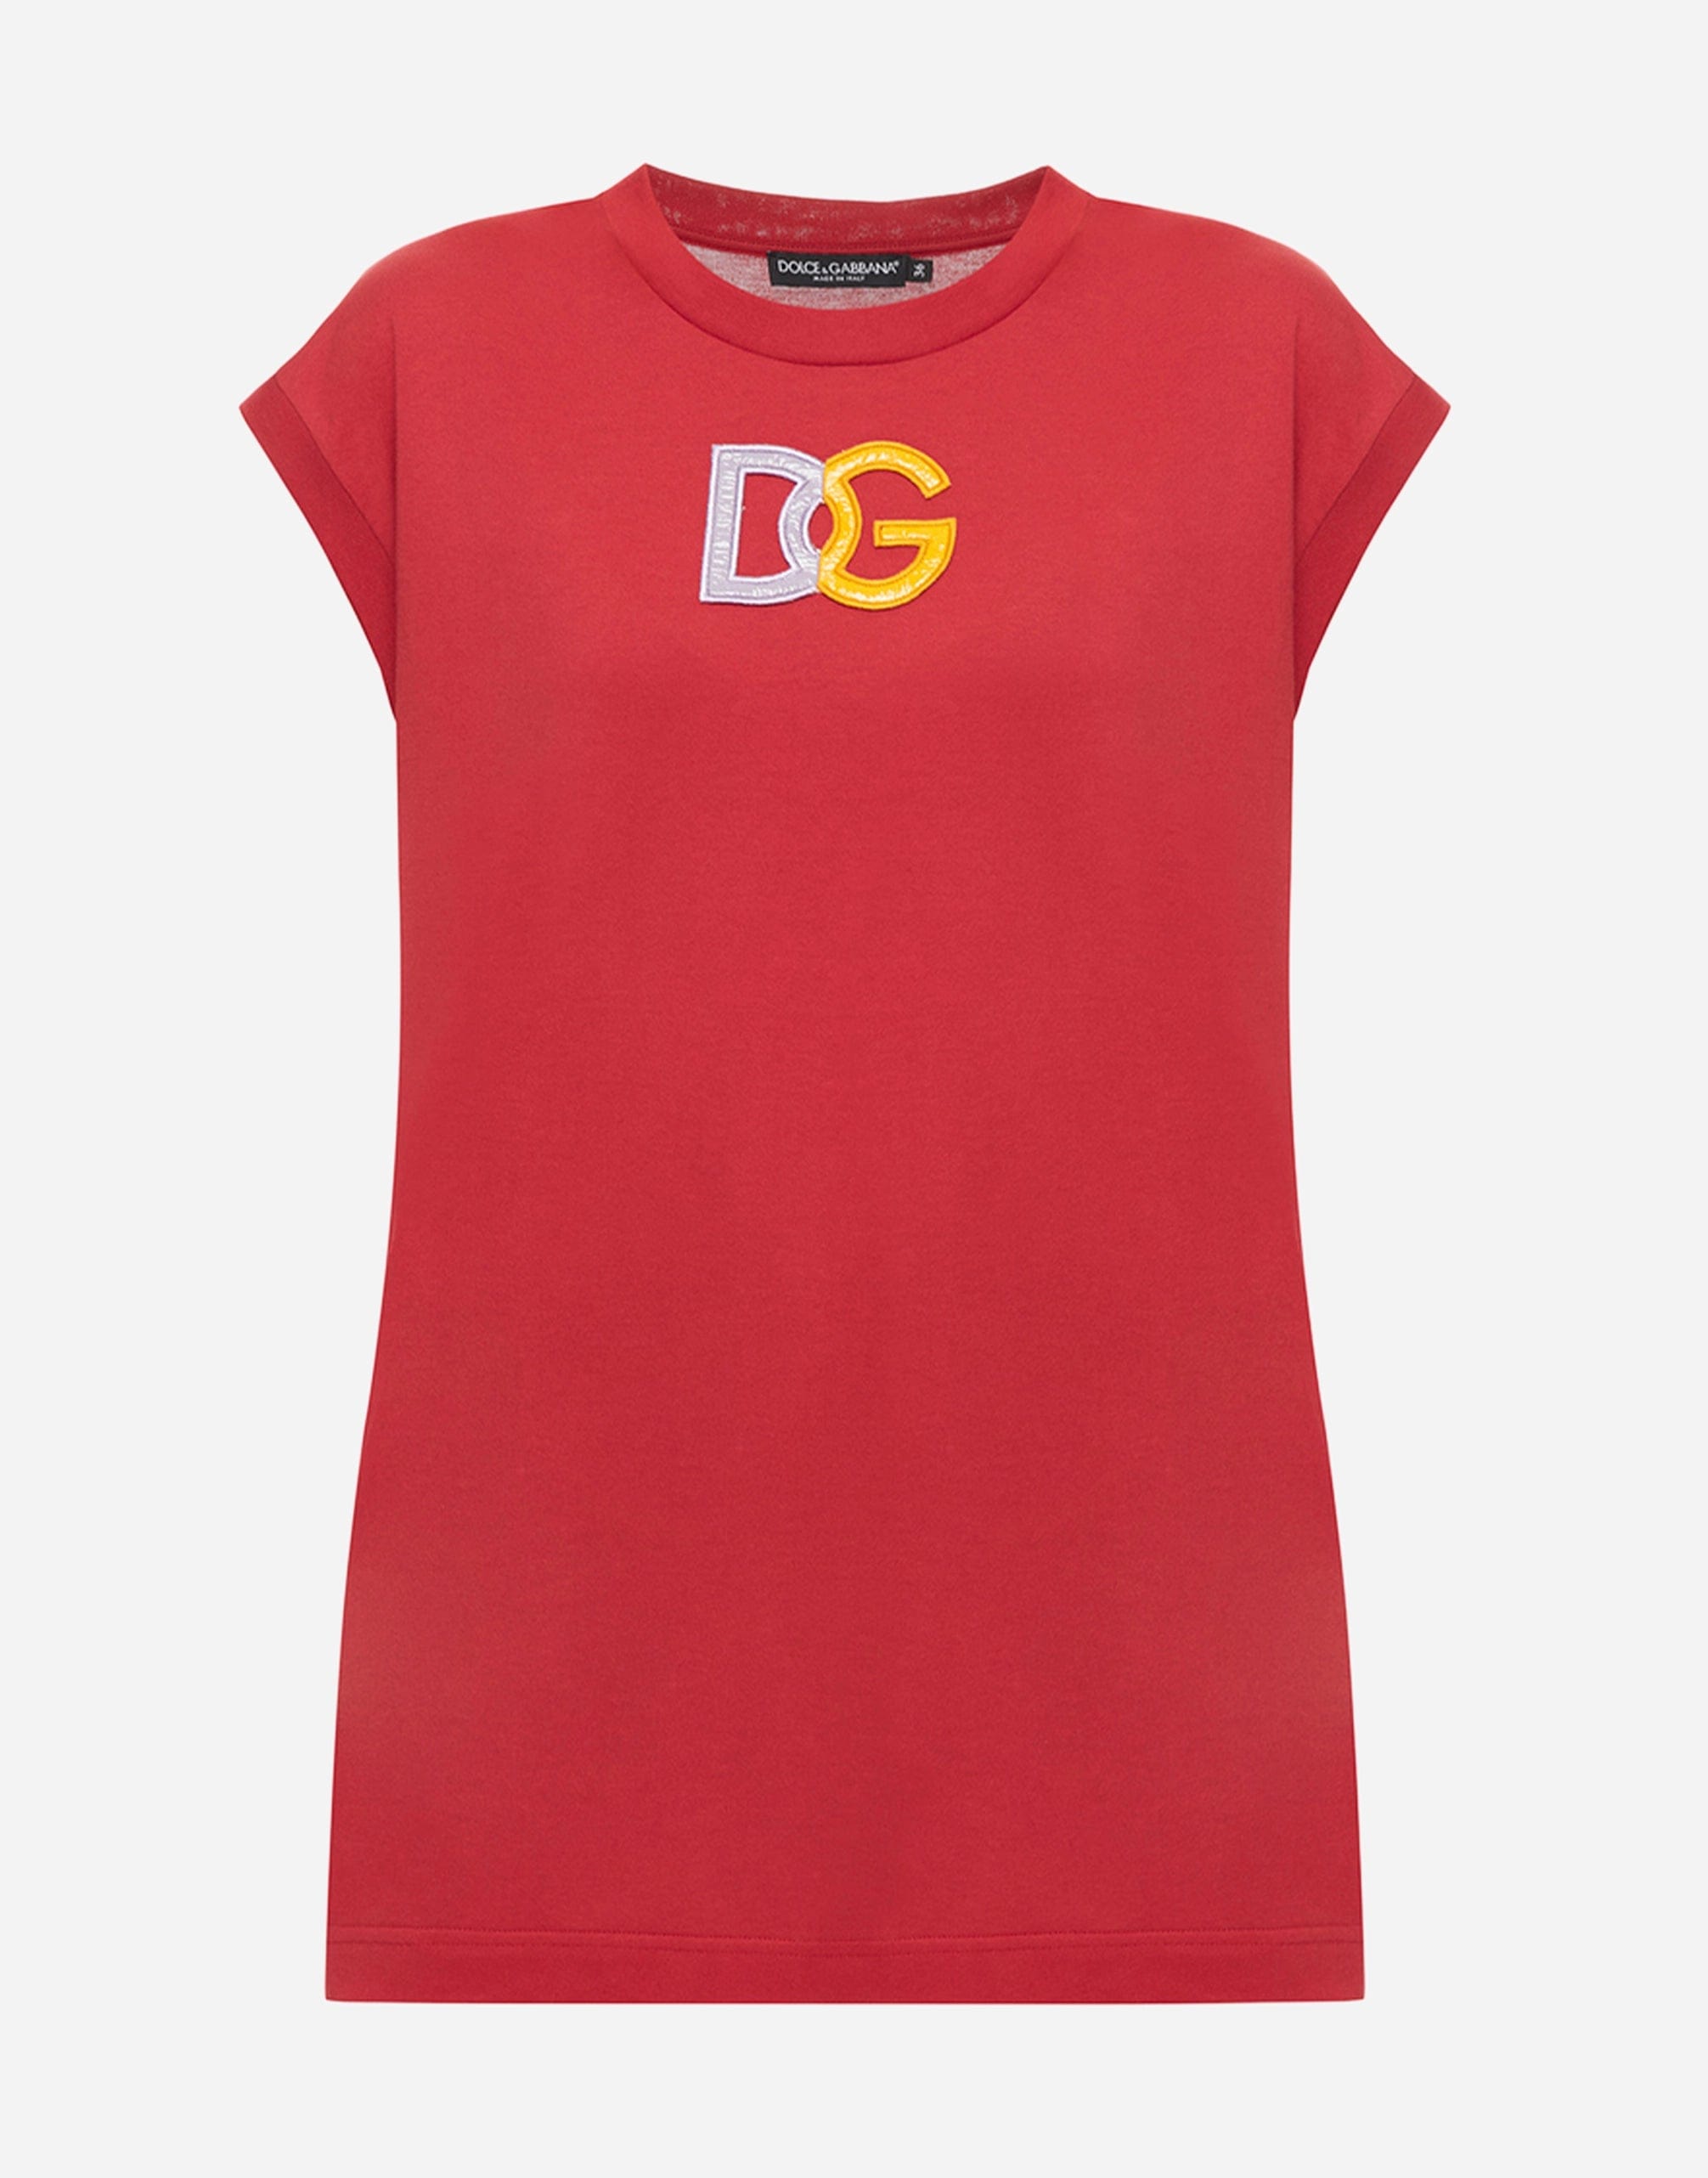 Dolce & Gabbana Red Cotton DG Logo Tank Top T-shirt